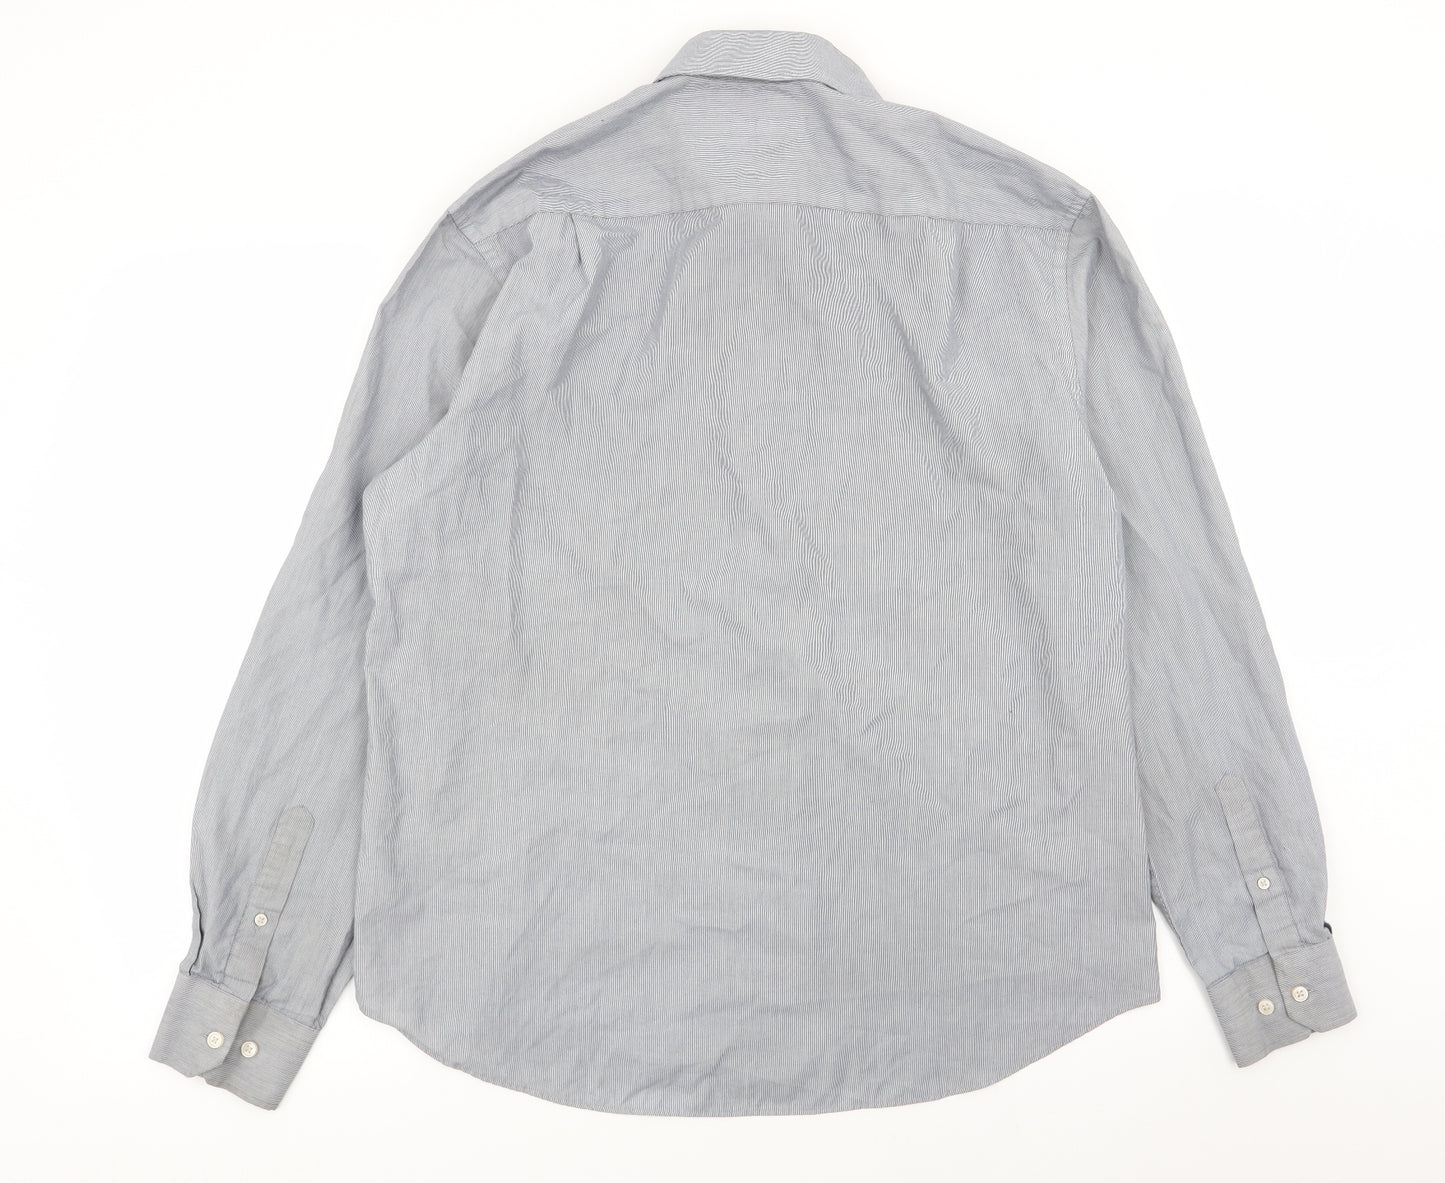 Asda George Mens Grey    Dress Shirt Size 16.5